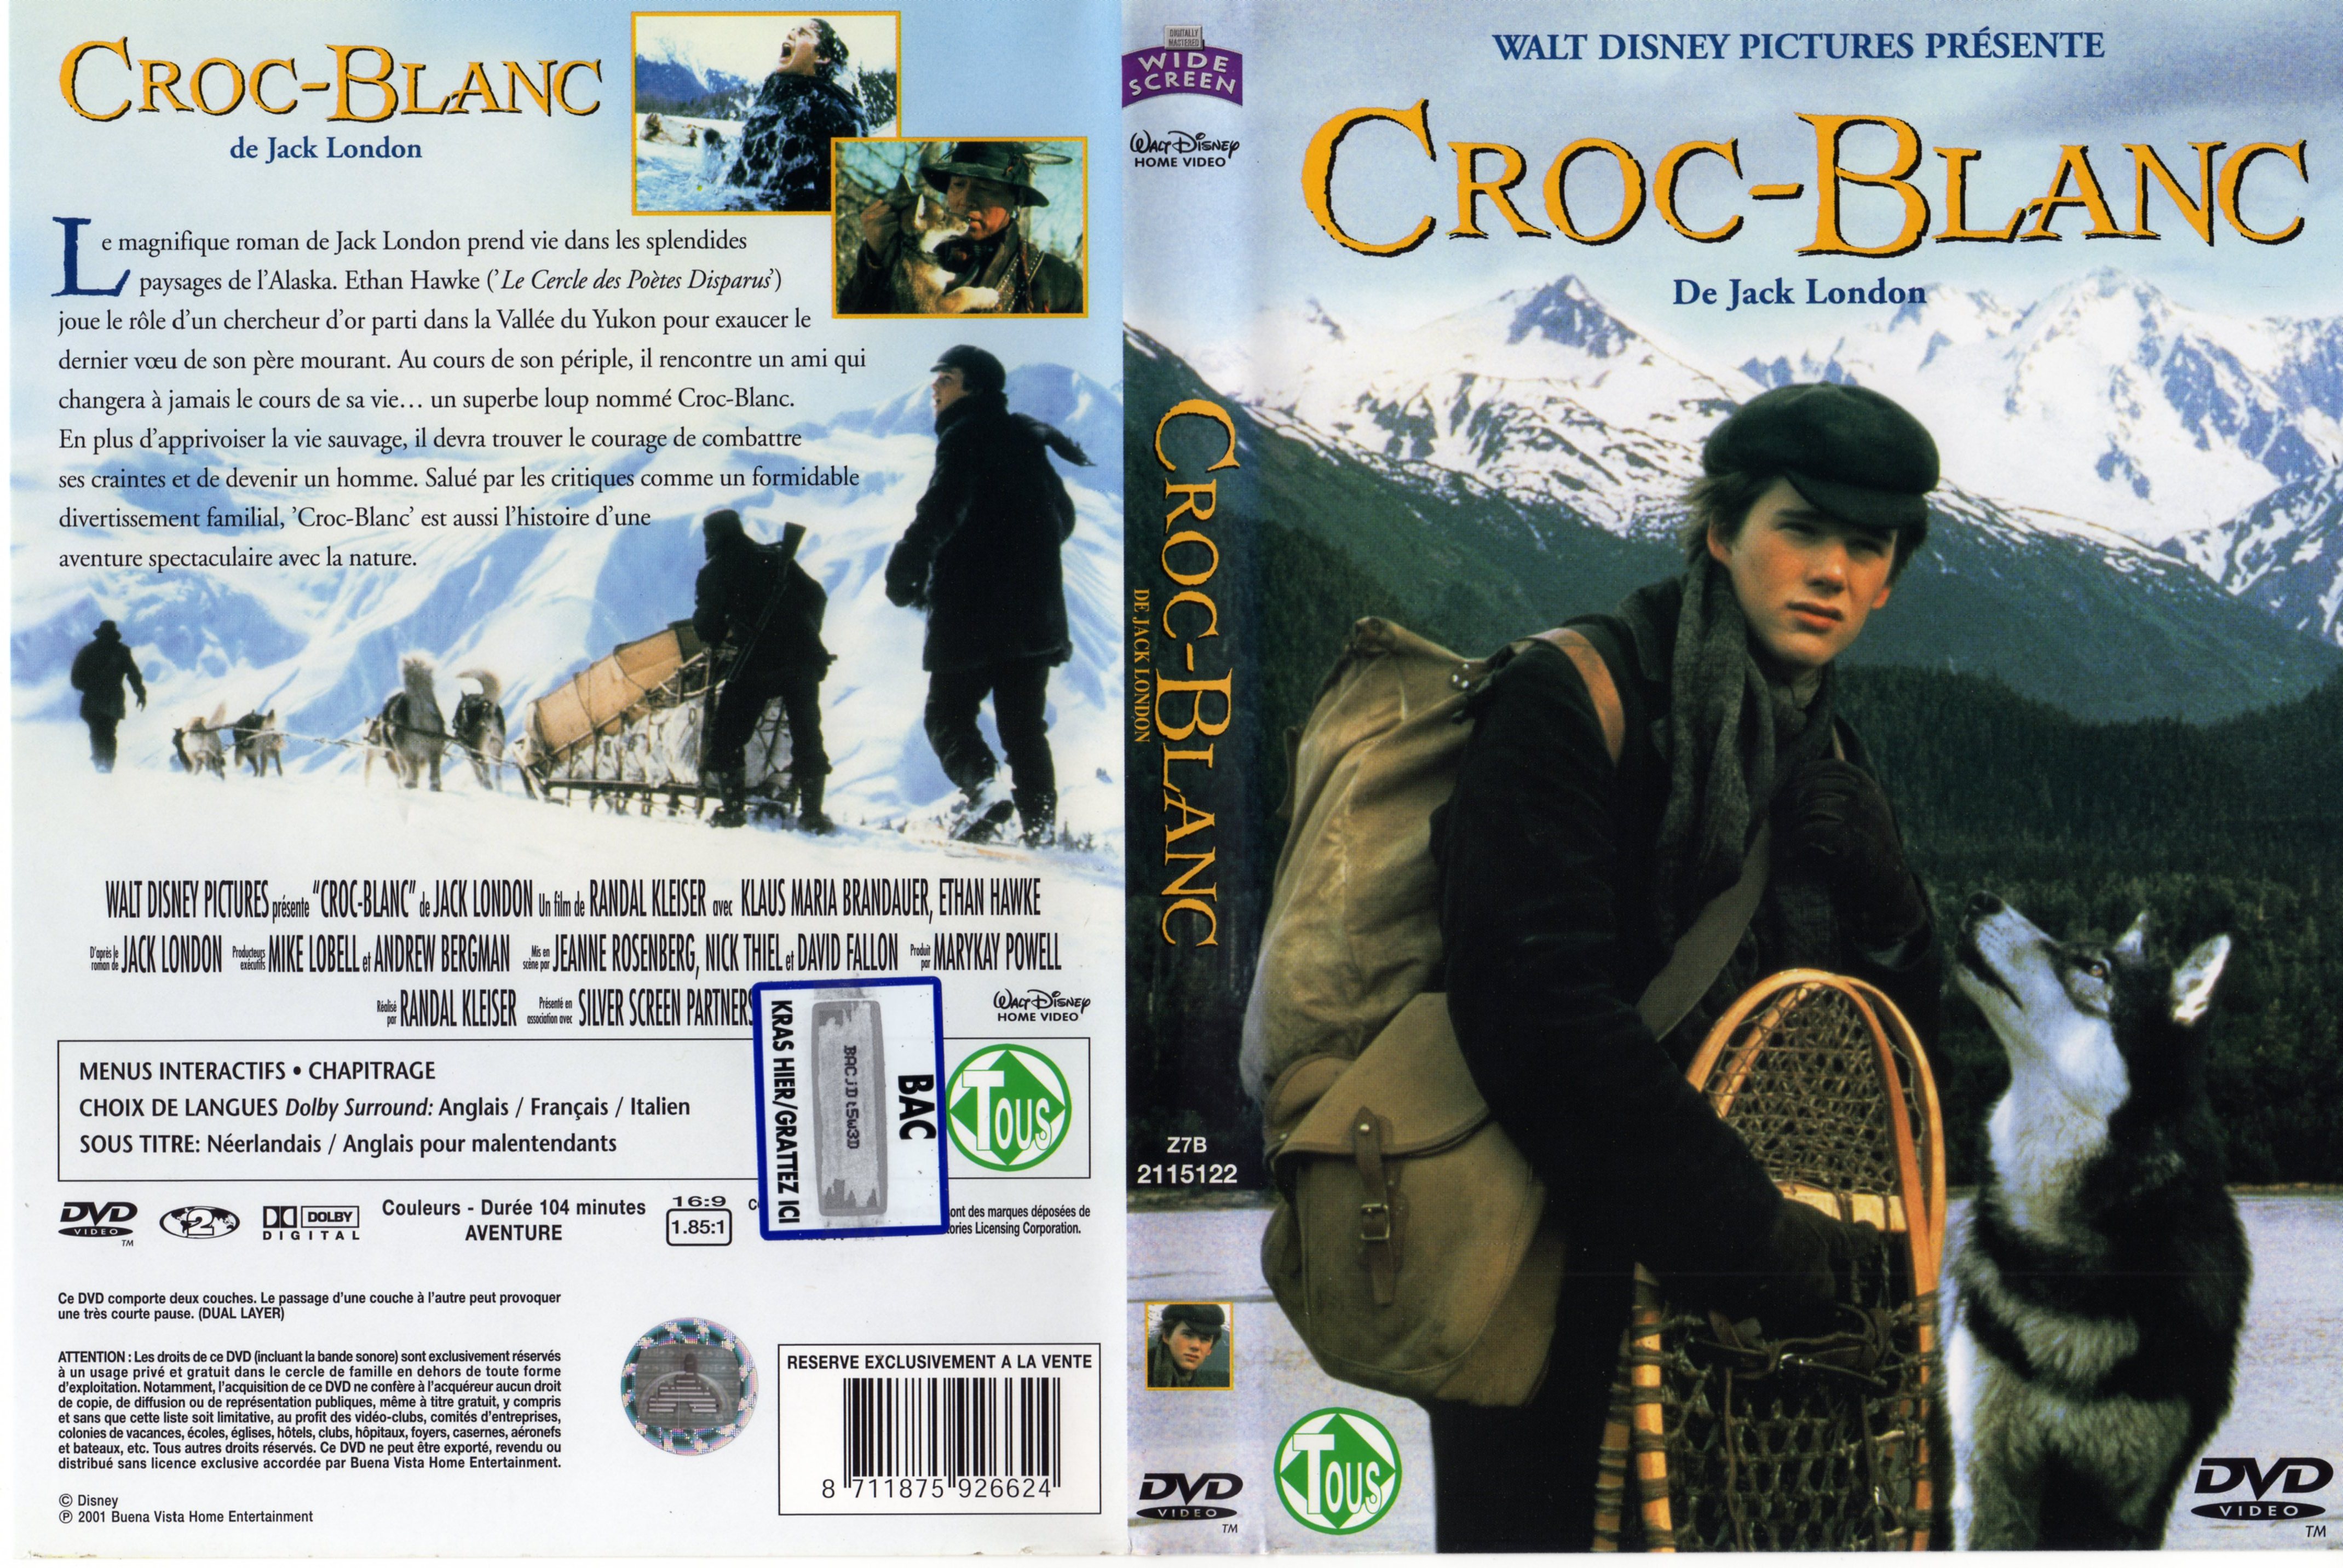 Jaquette DVD Croc-blanc v3